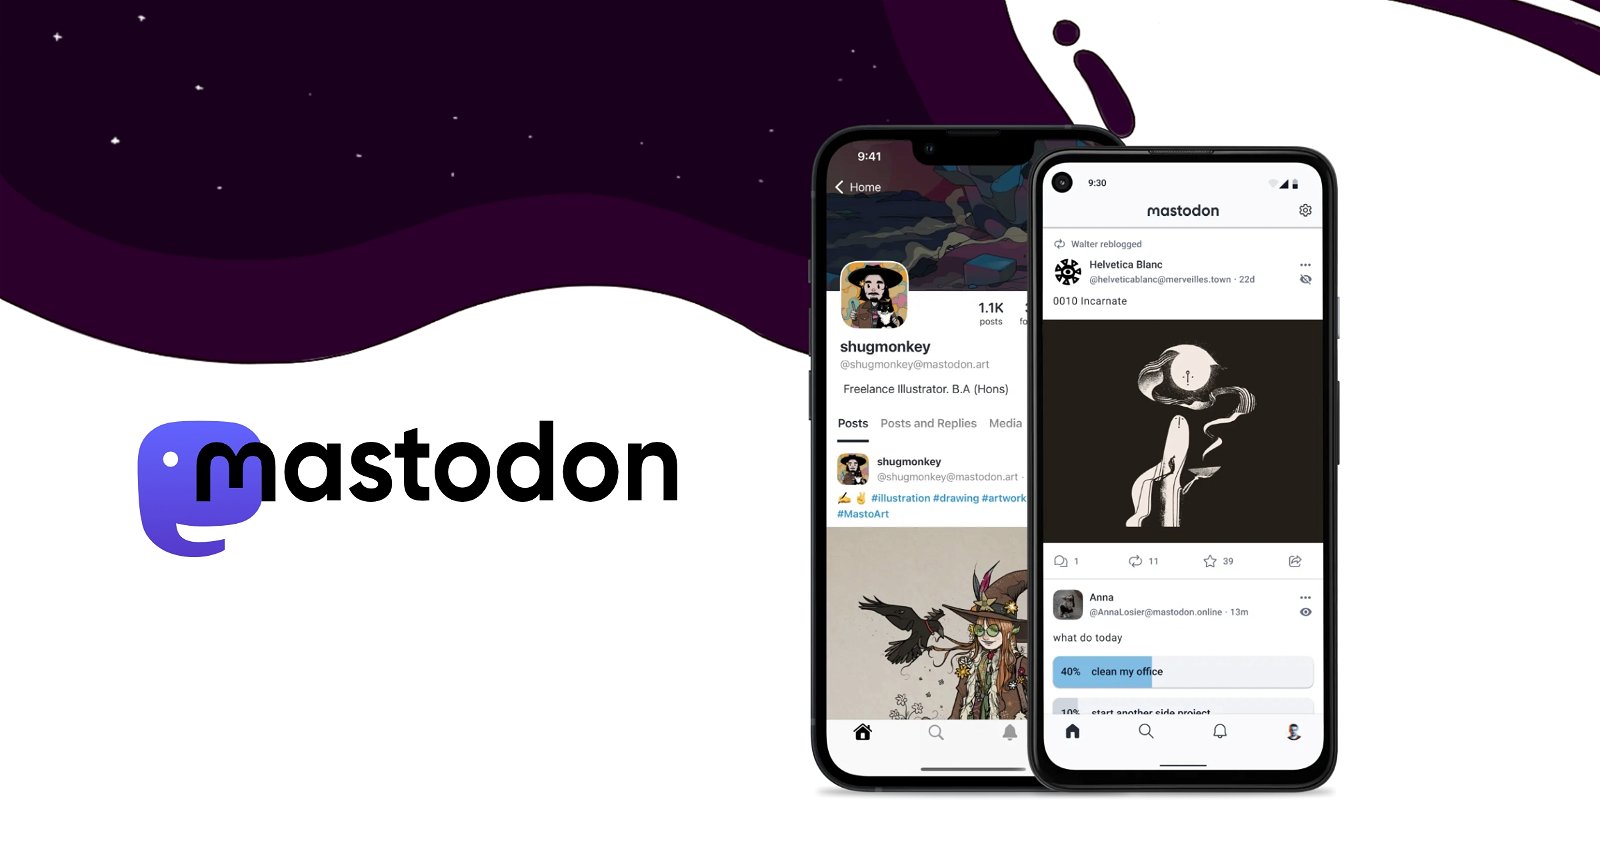 Capturas de pantalla de la red social Mastodon.